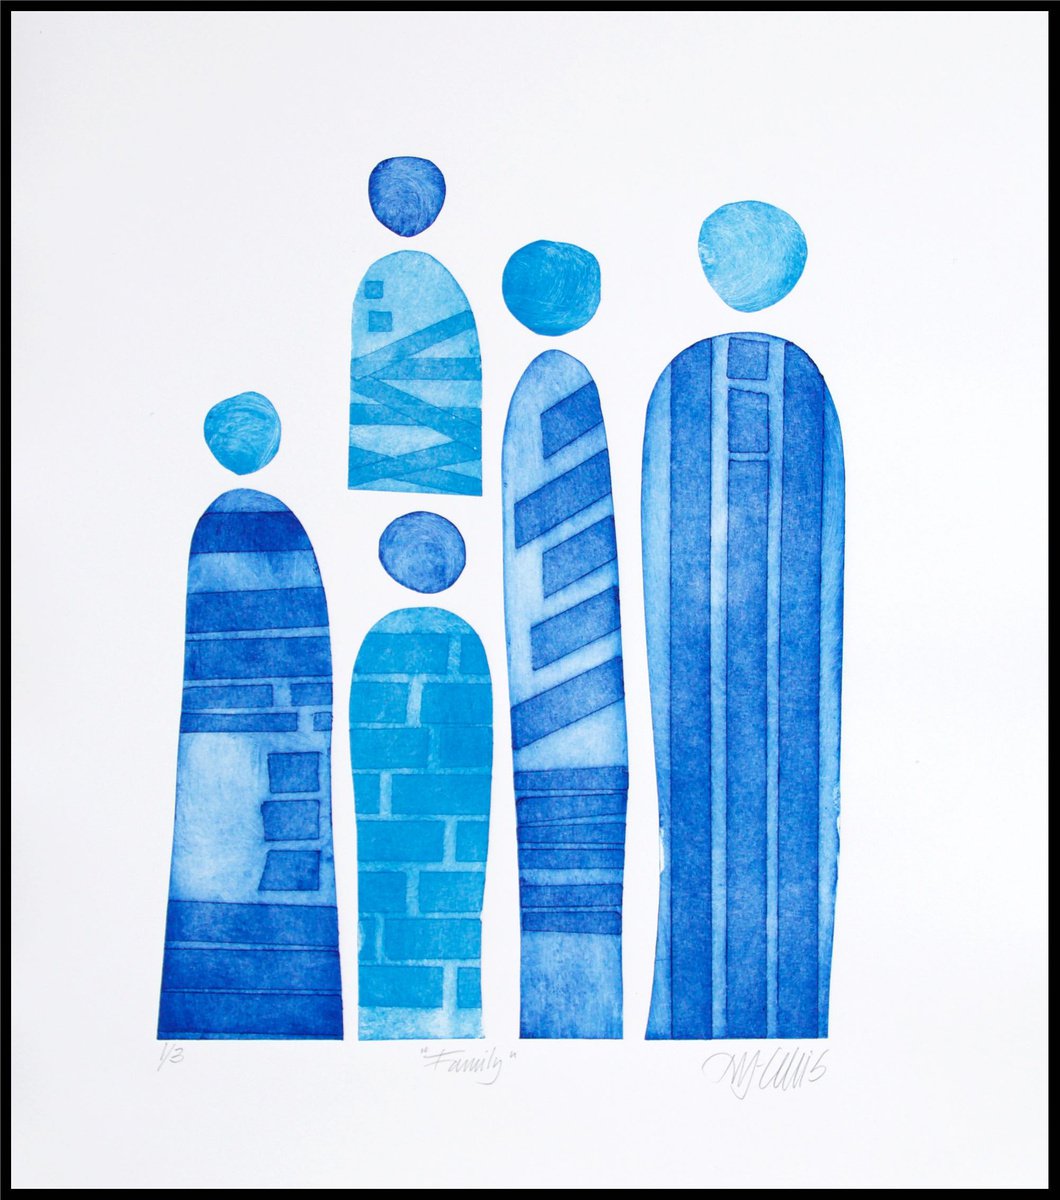 Family, collagraph by Mariann Johansen-Ellis